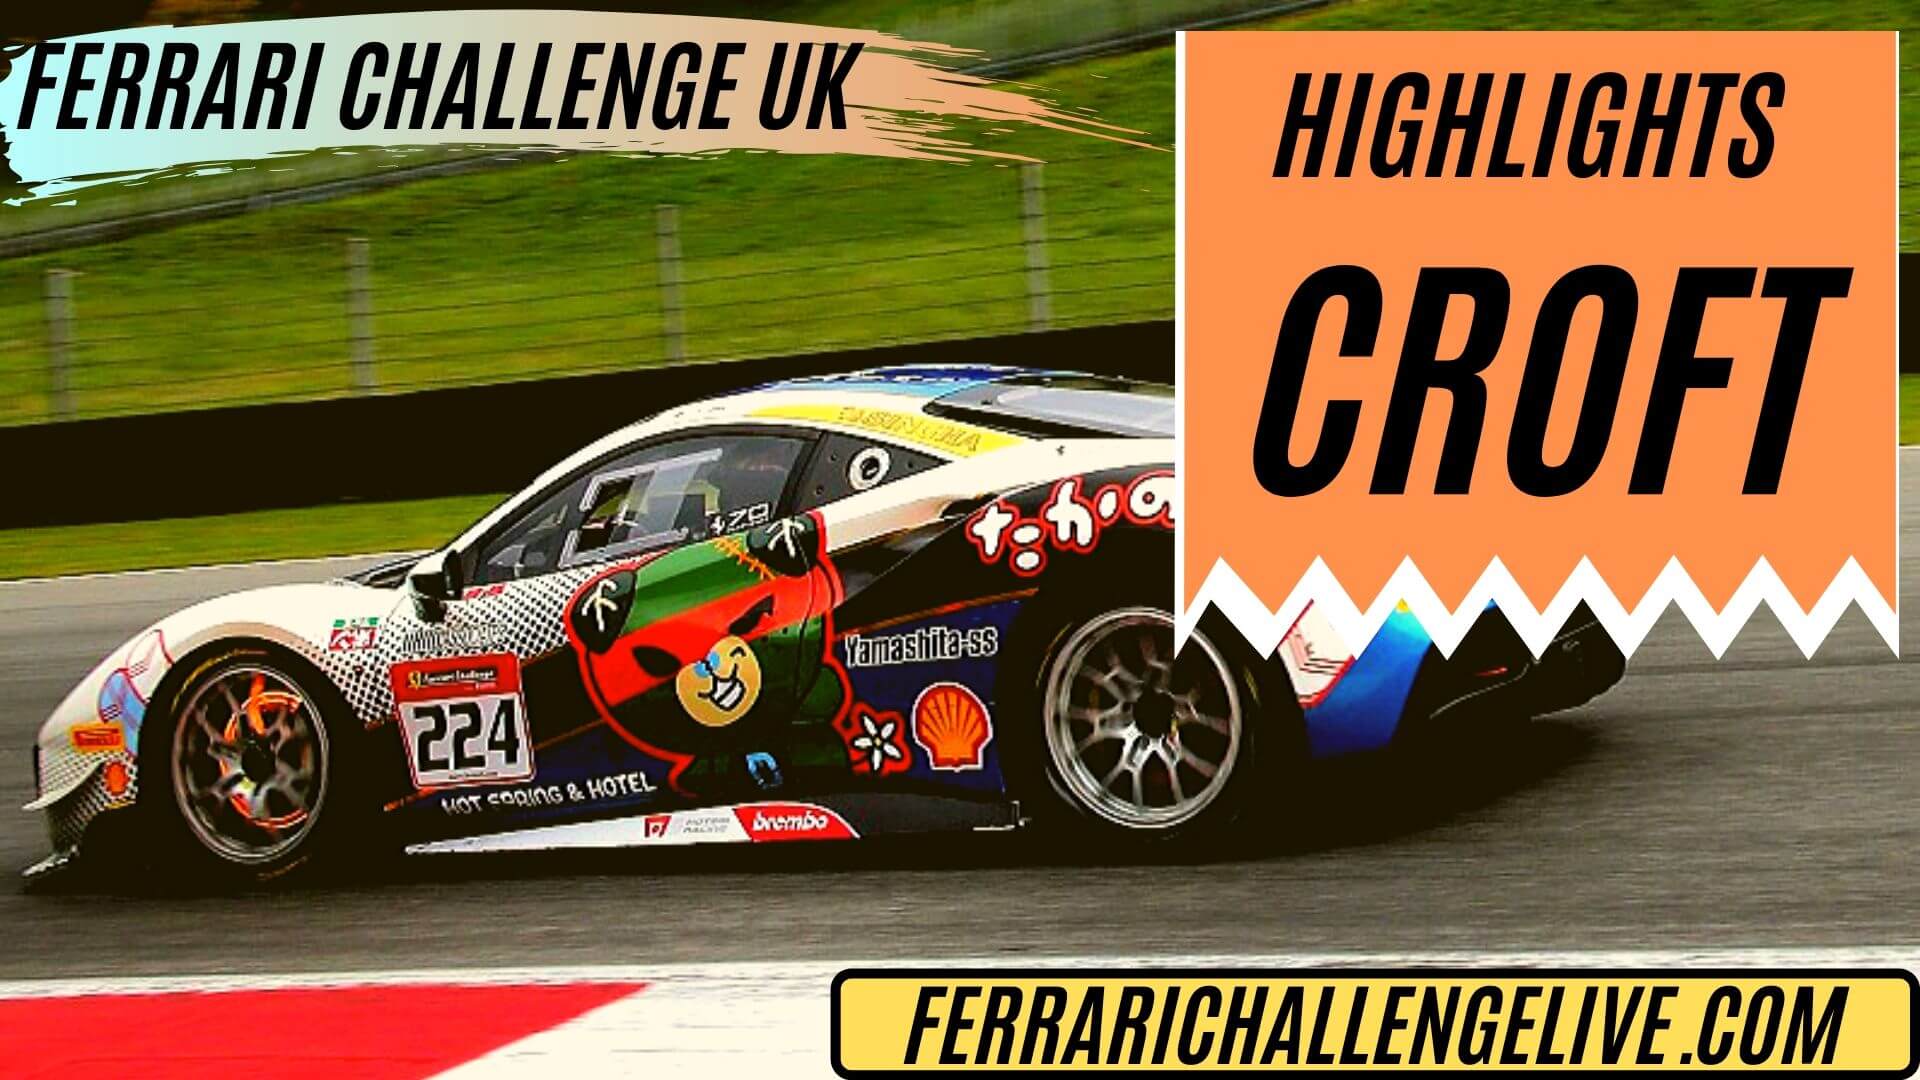 Croft Ferrari Challenge UK Highlights 2019